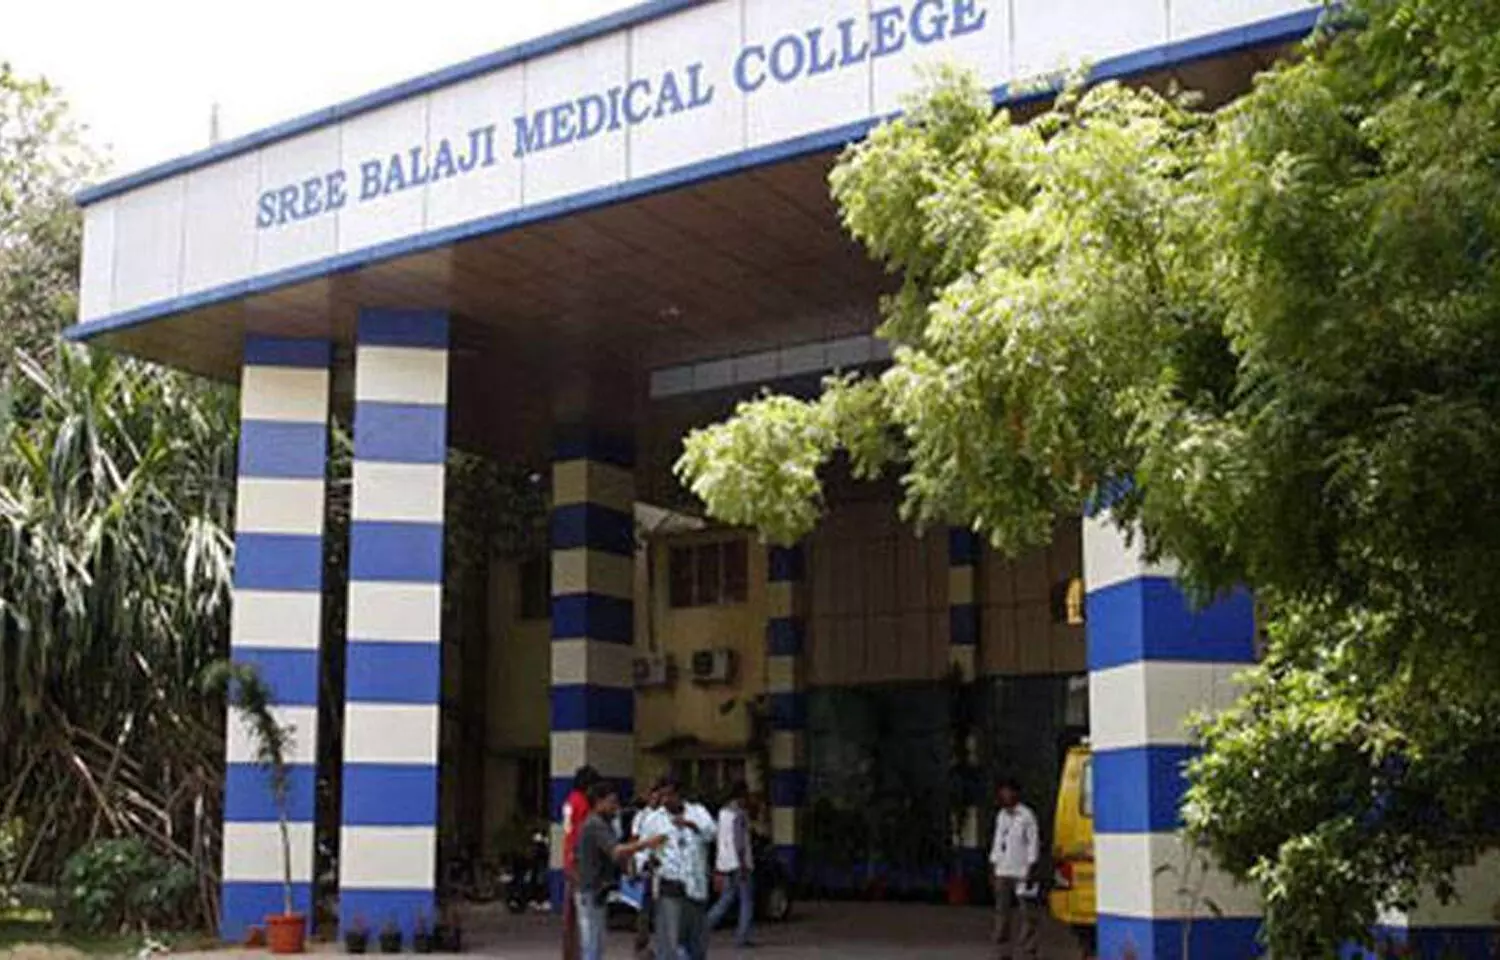 TN: Sree Balaji Medical College Hospital granted 6 patents